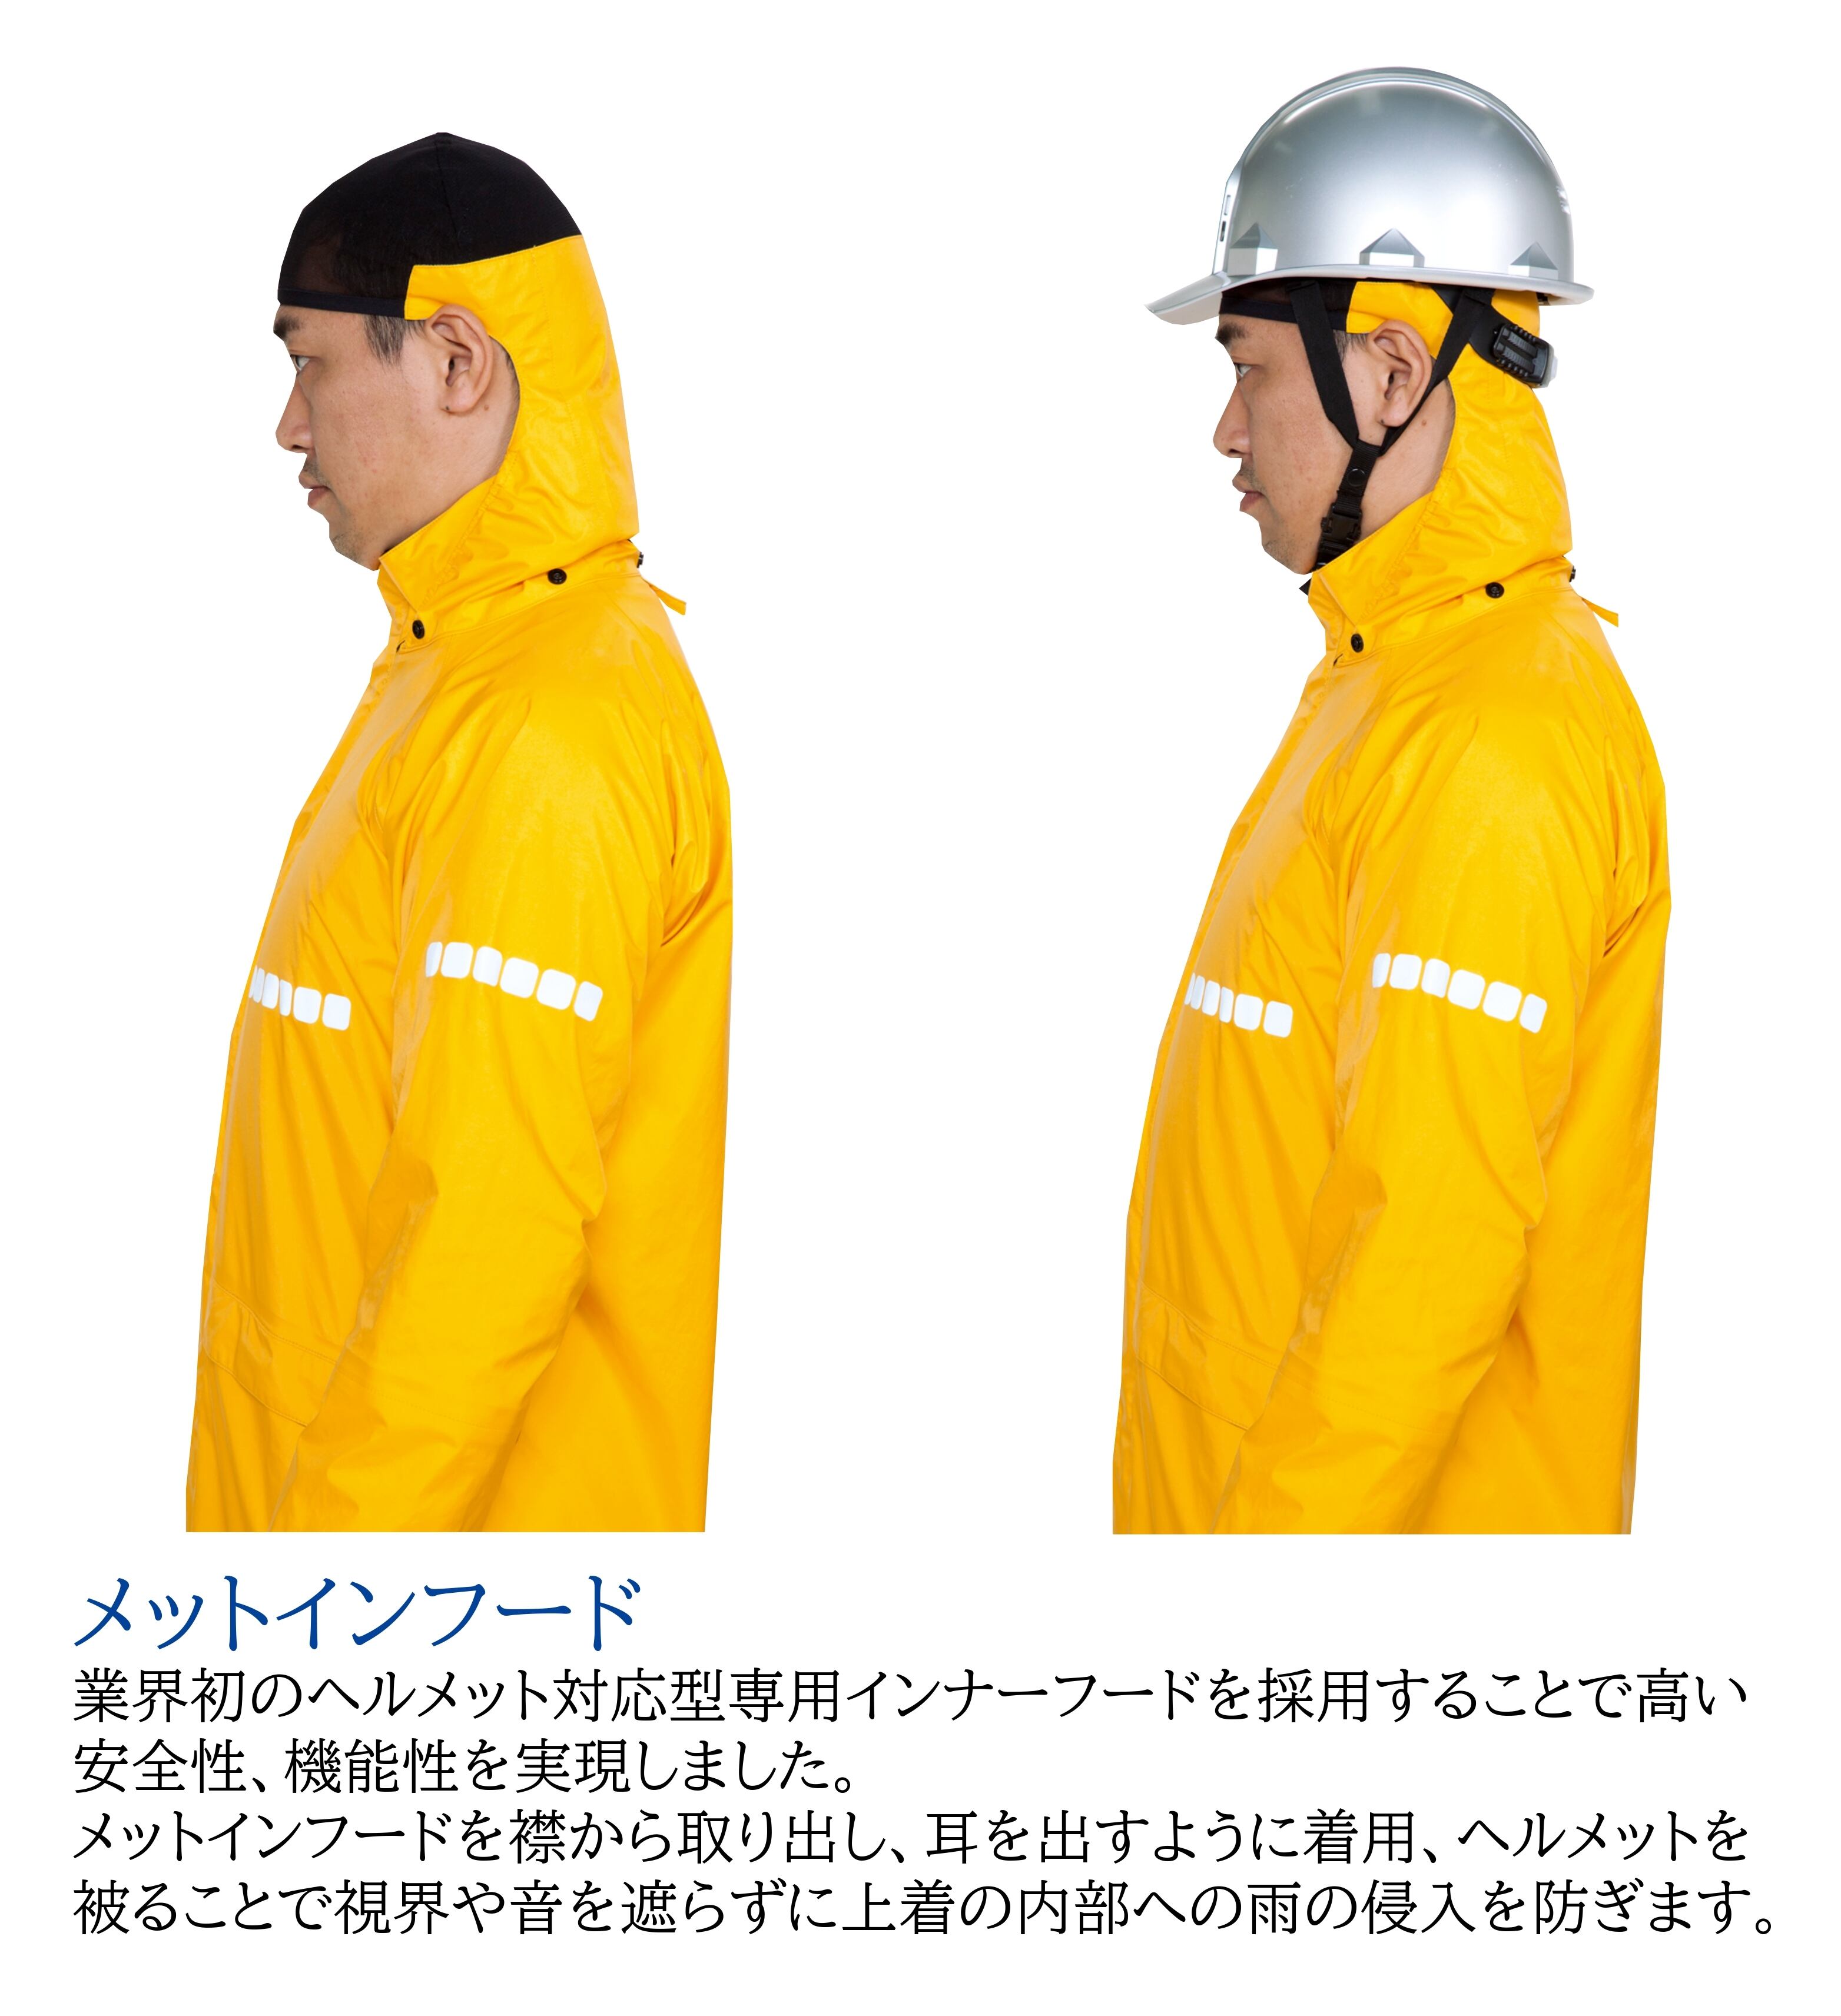 [APt PRO] AP1000 ワーキングレインスーツ プロ仕様 作業用 収納袋付き Maegaki Rain Wear Collection